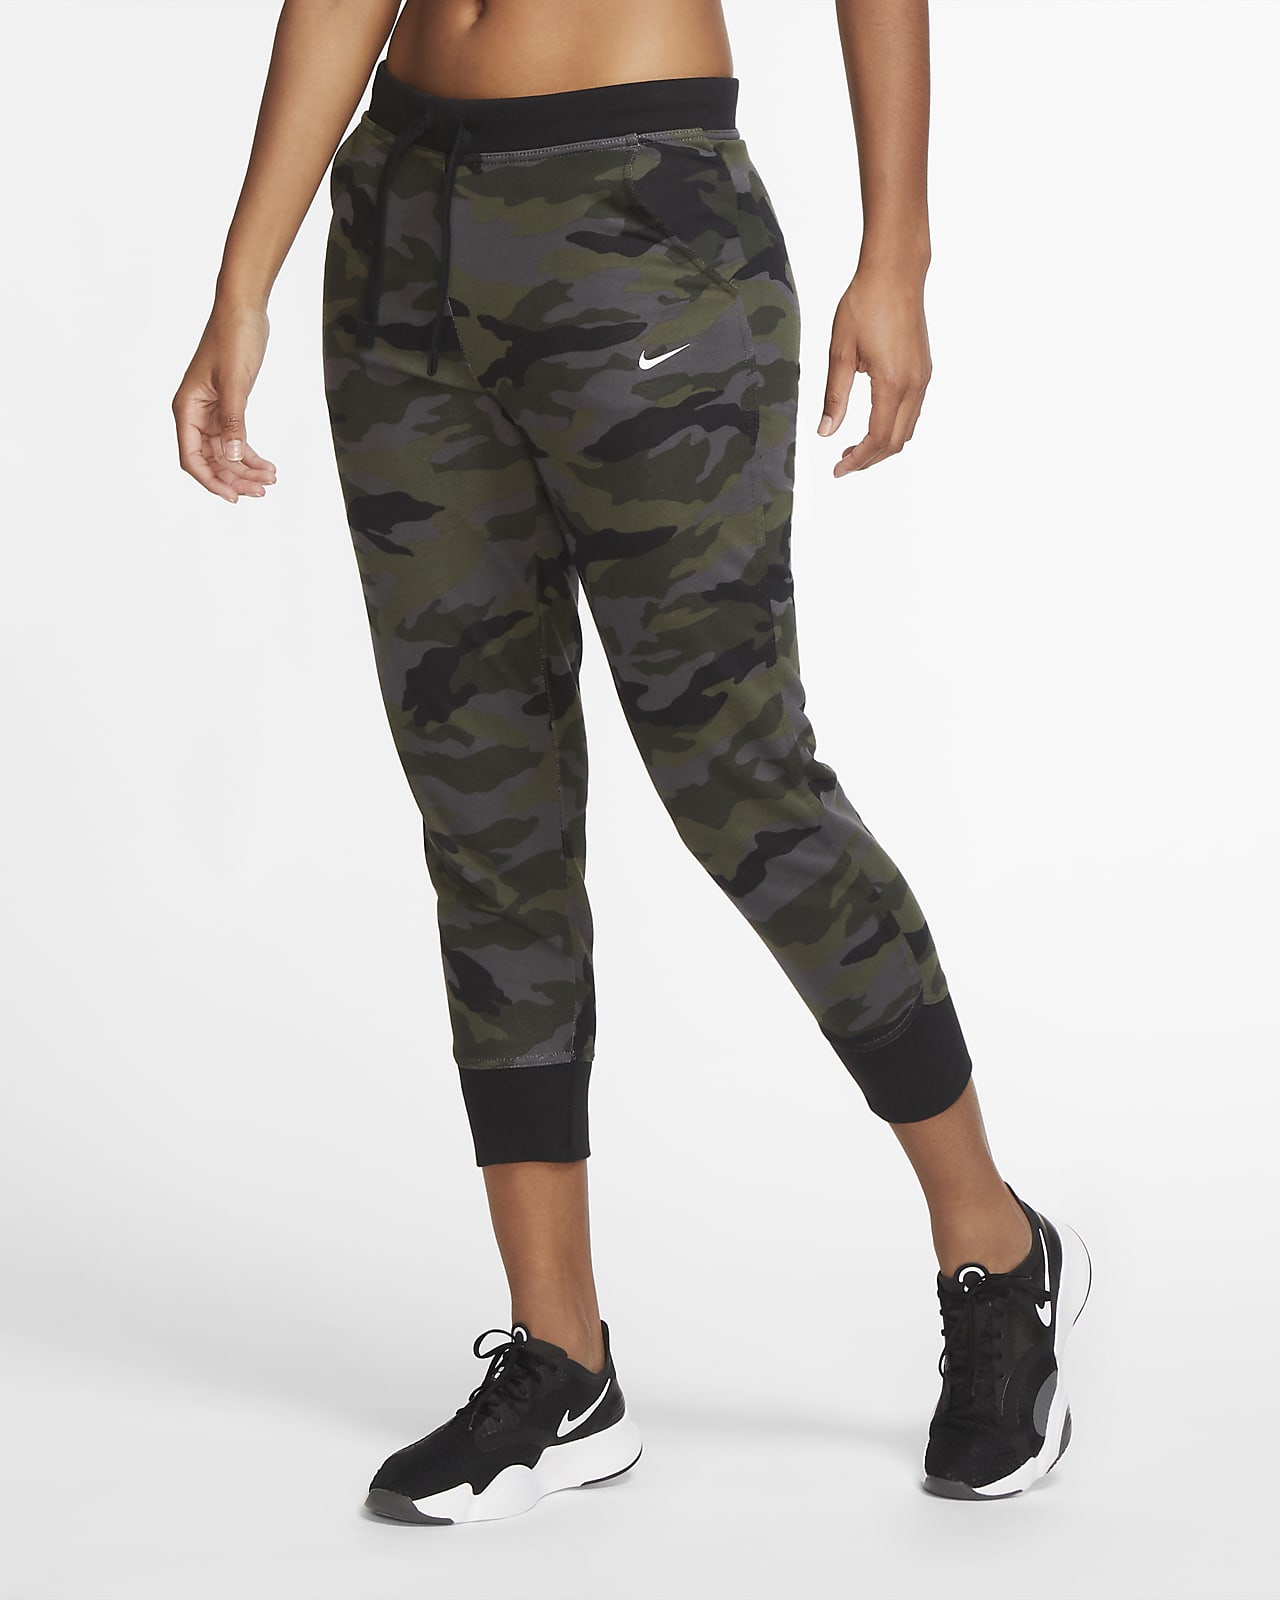 Pantalones De Entrenamiento Camuflados 7 8 Para Mujer Nike Dri Fit Get Fit Nike Com